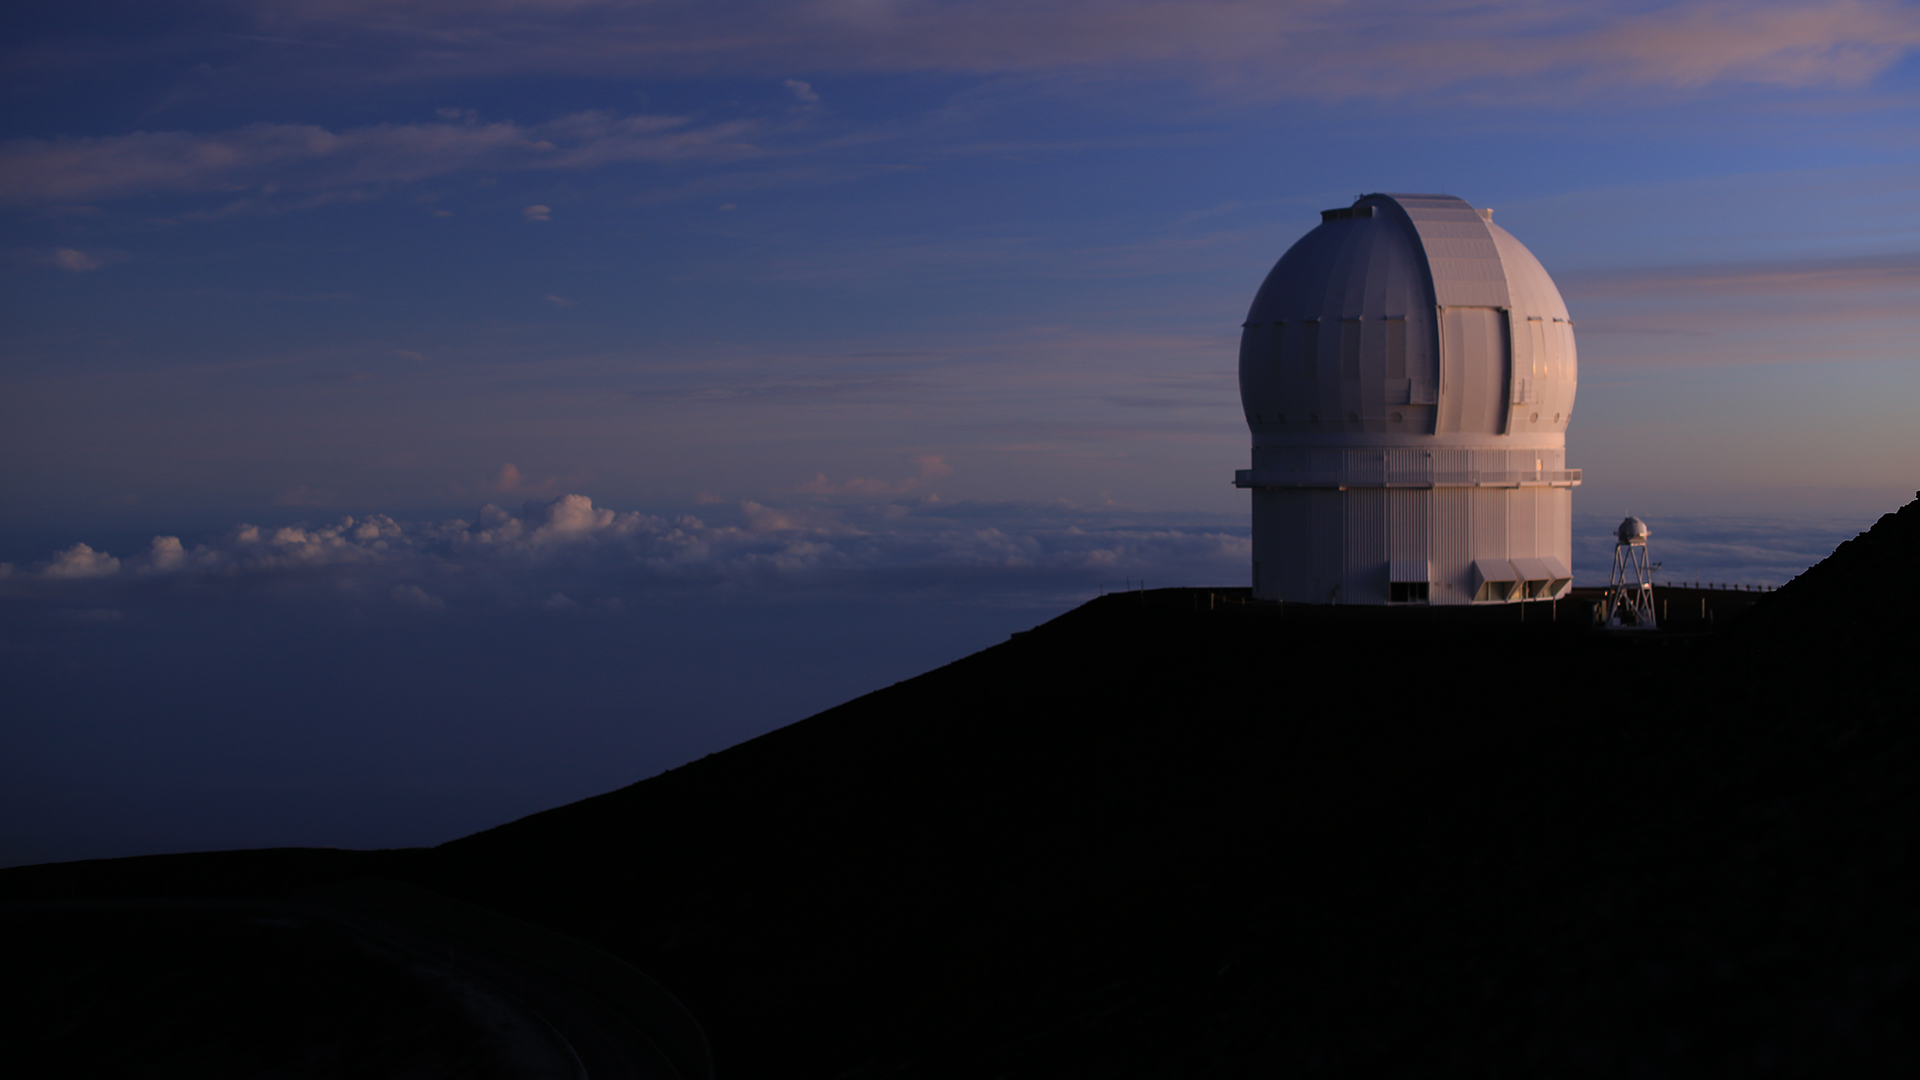 Mauna Kea Observatories on the Big Island of Hawaii, USA. Windows 10 Spotlight Image